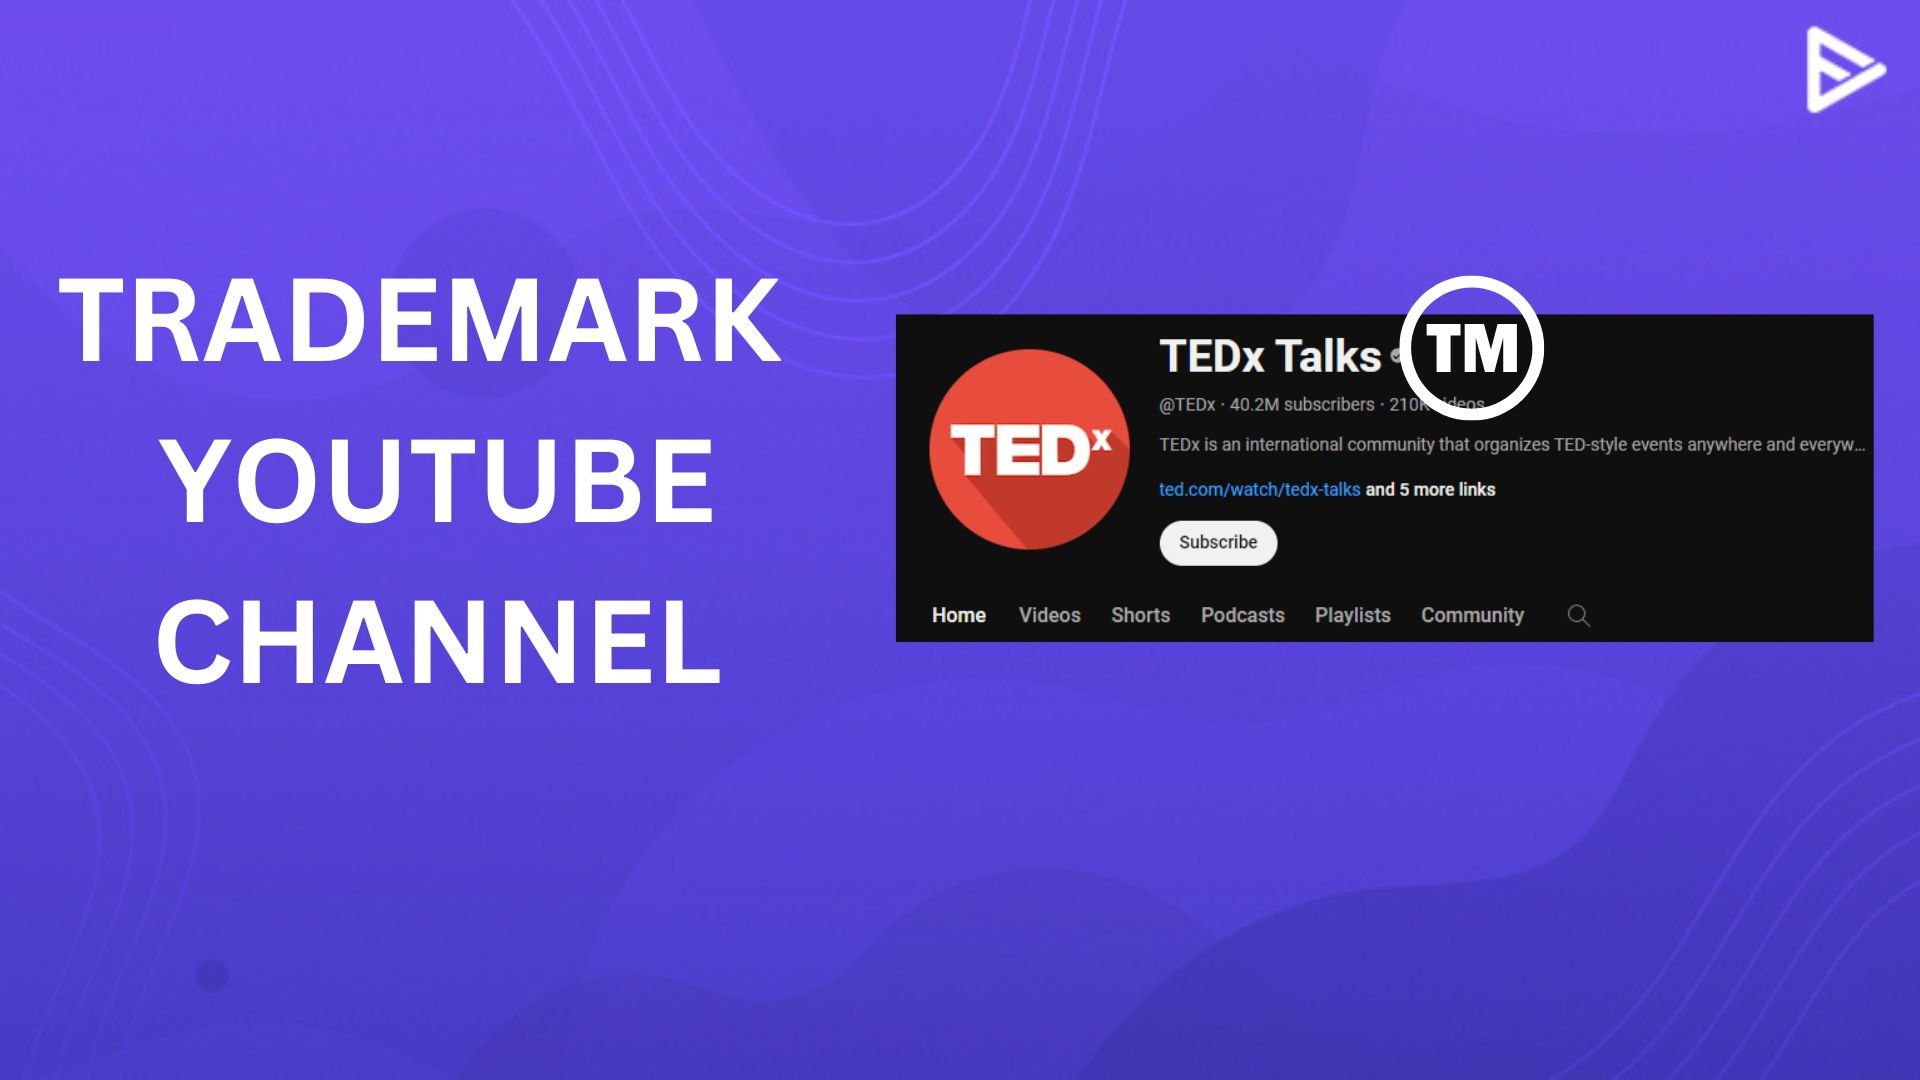 Trademark YouTube channel